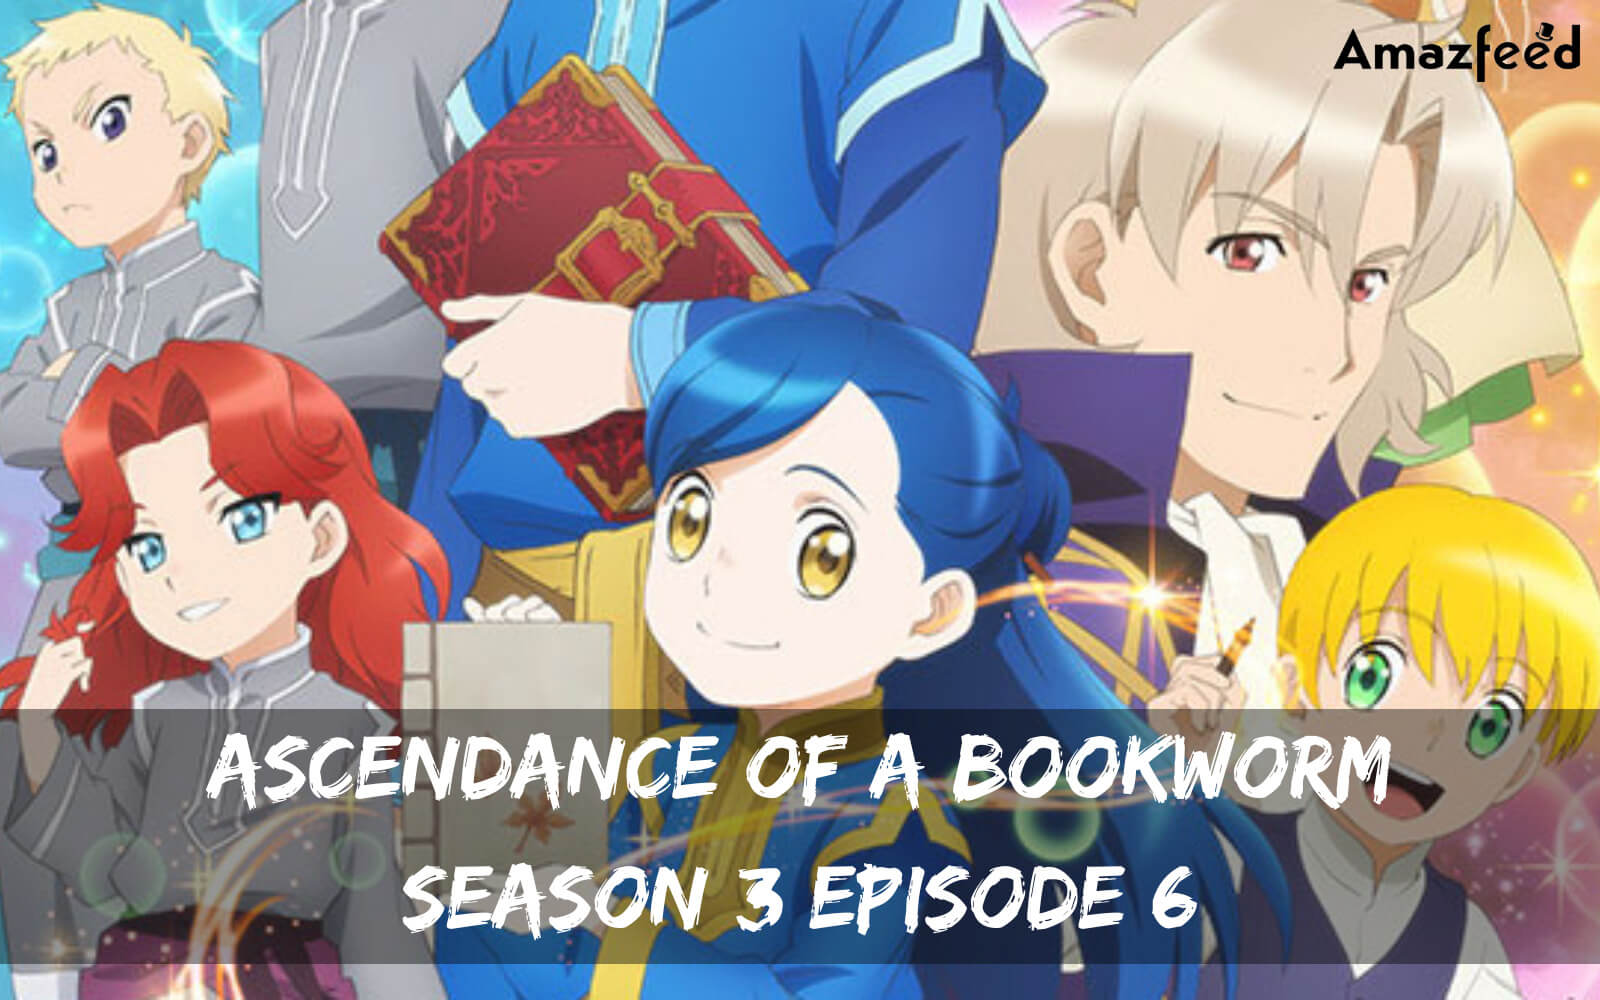 Ascendance of a Bookworm Season 3 Episode 6 release date